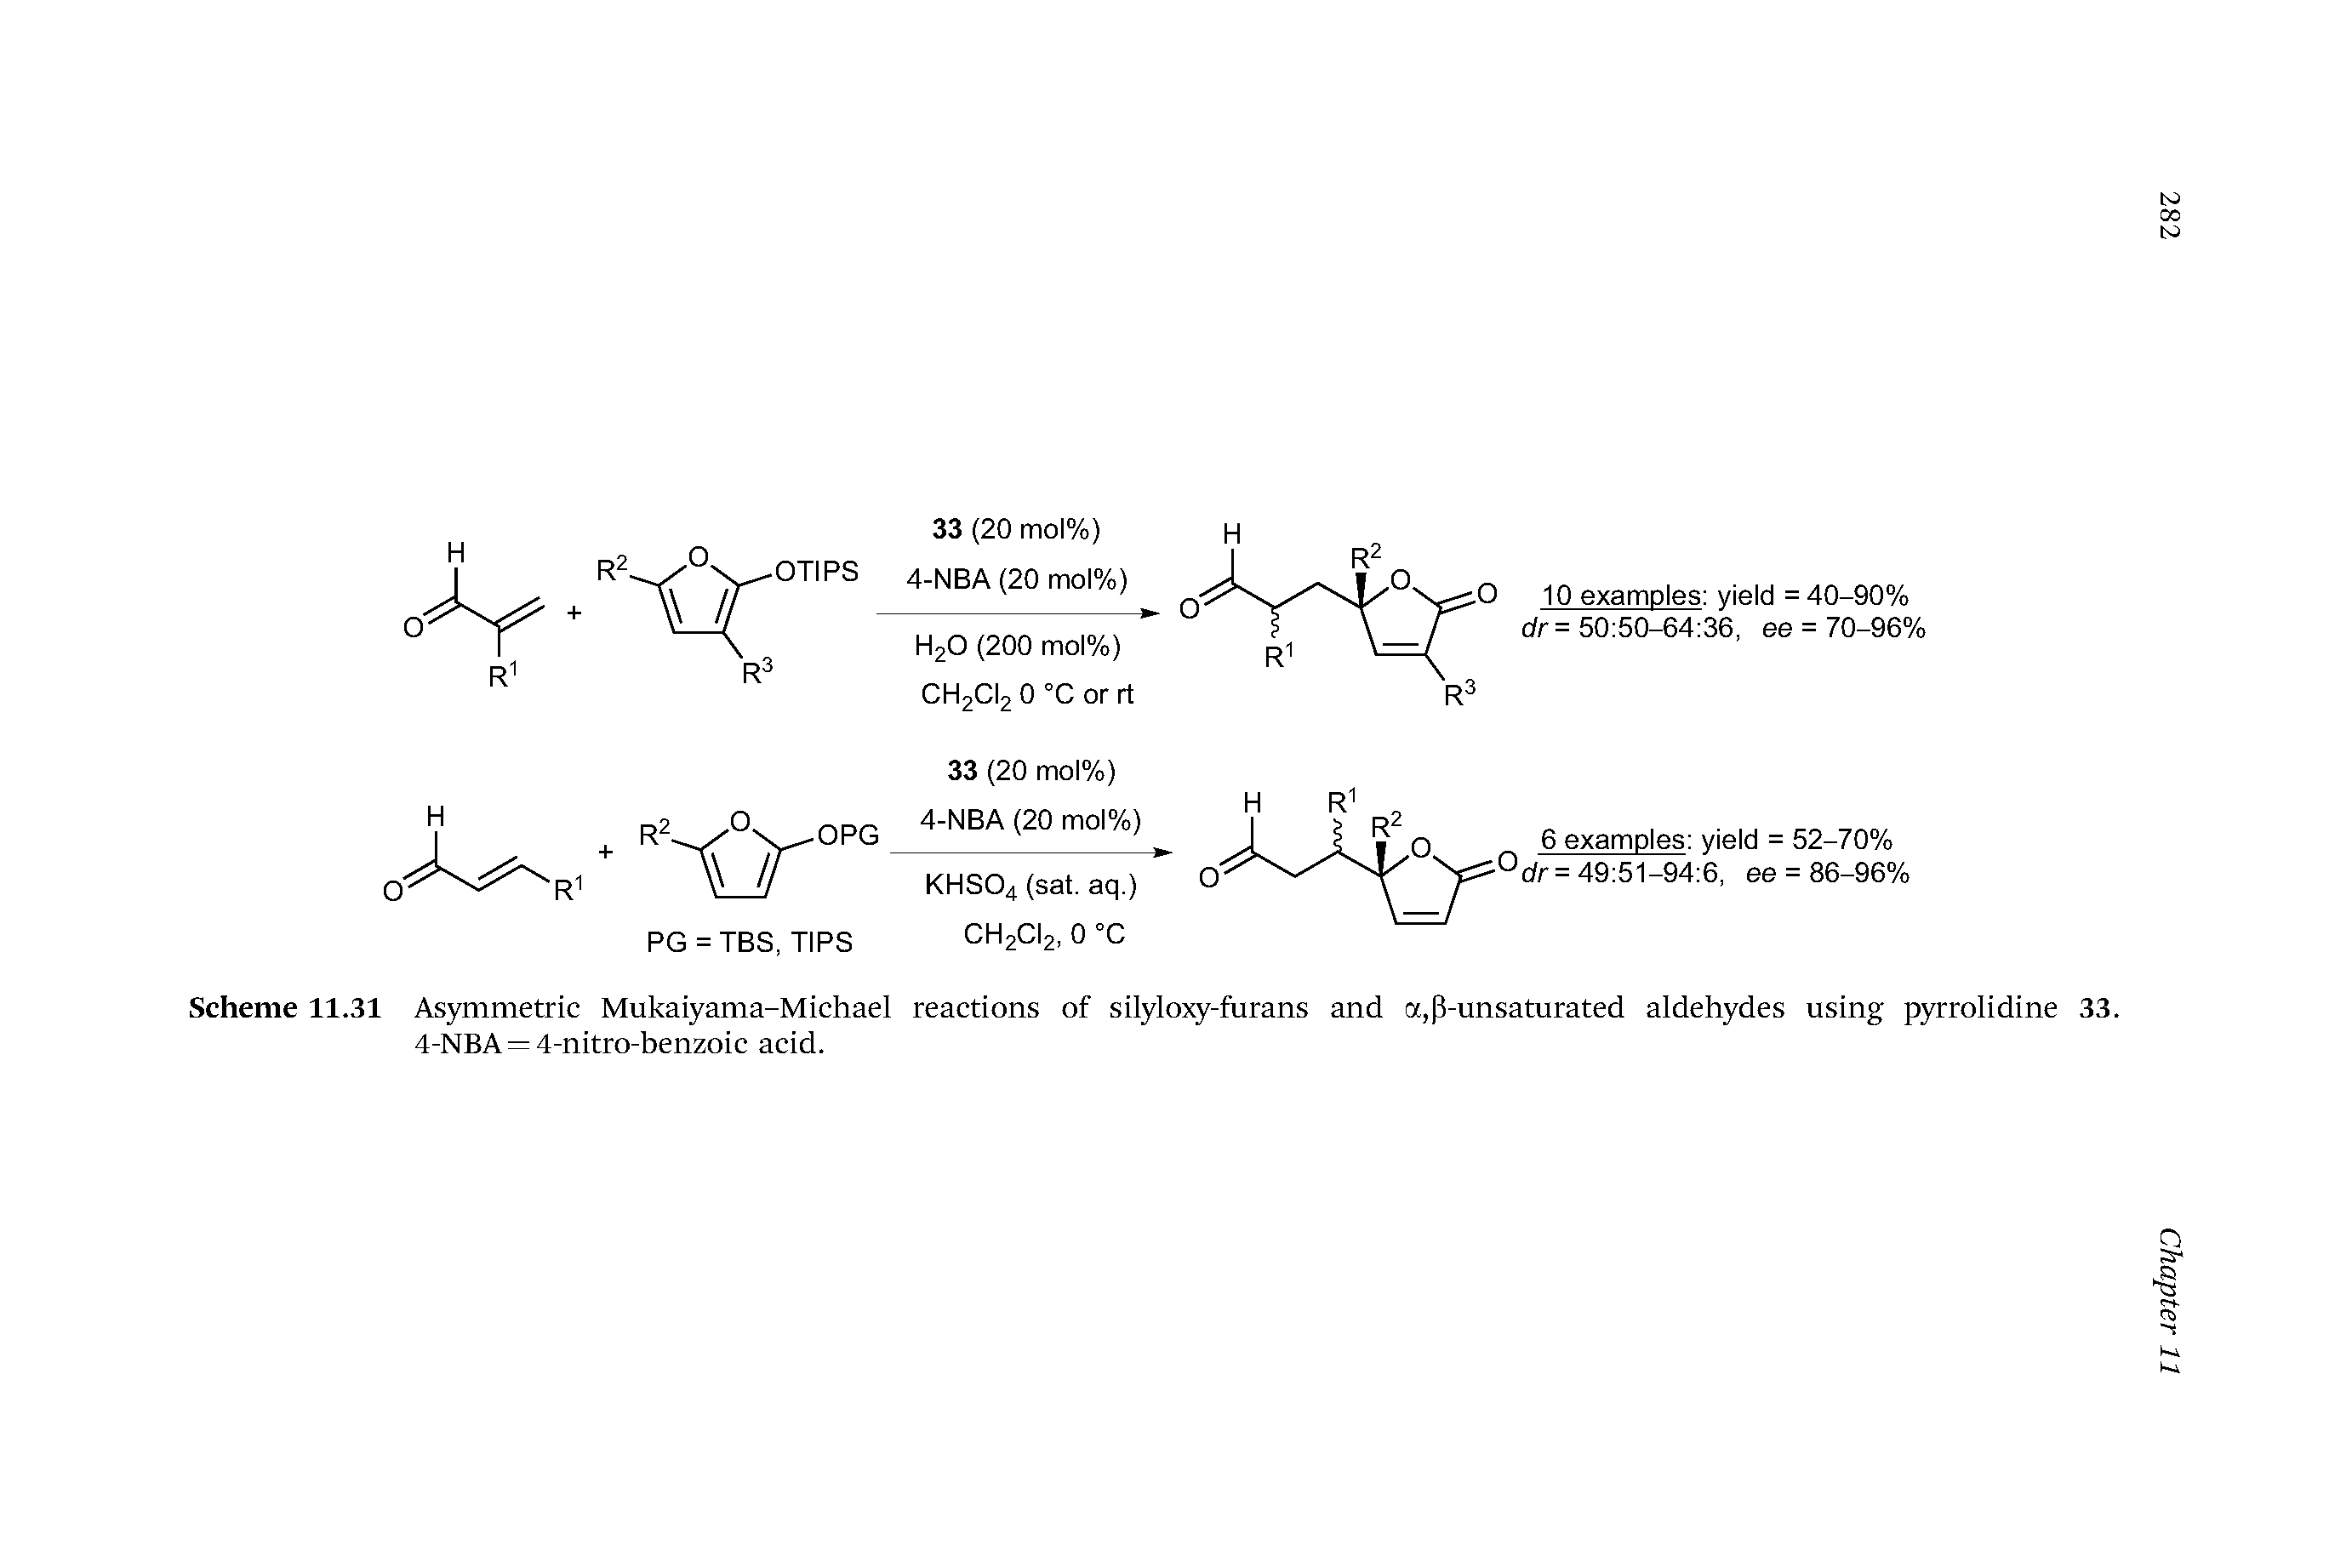 Scheme 11.31 Asymmetric Mukaiyama-Michael reactions of silyloxy-furans and a,p-unsaturated aldehydes using pyrrolidine 33. 4-NBA = 4-nitro-benzoic acid.